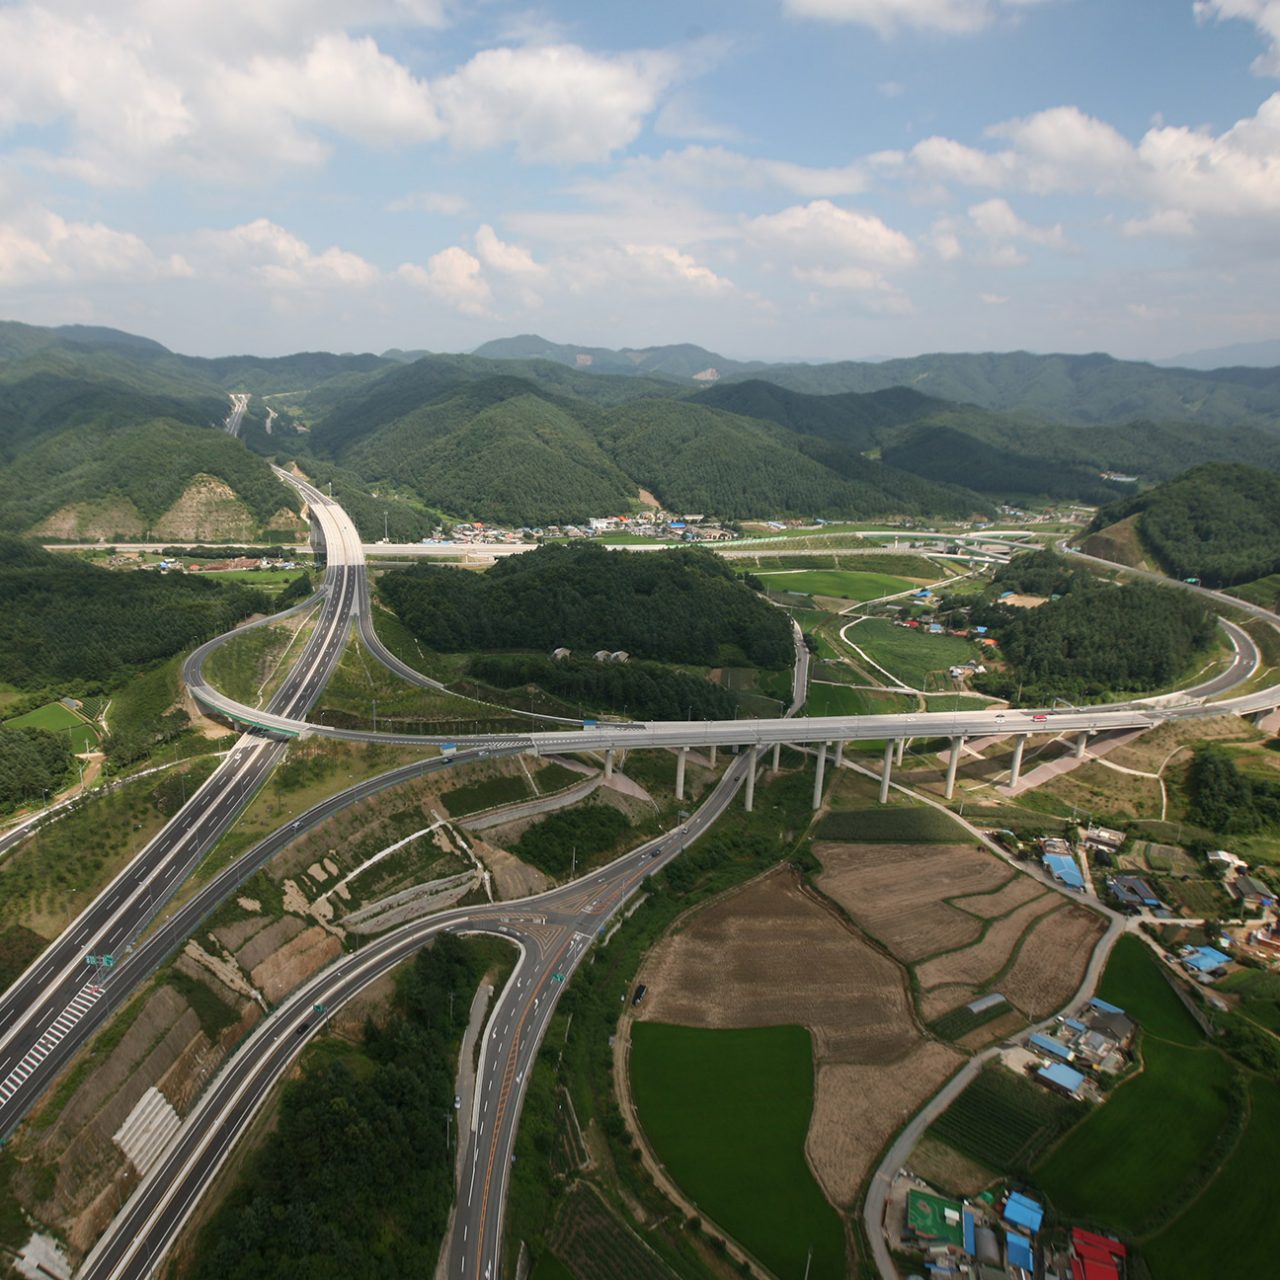 Seoul-Chuncheon Expressway